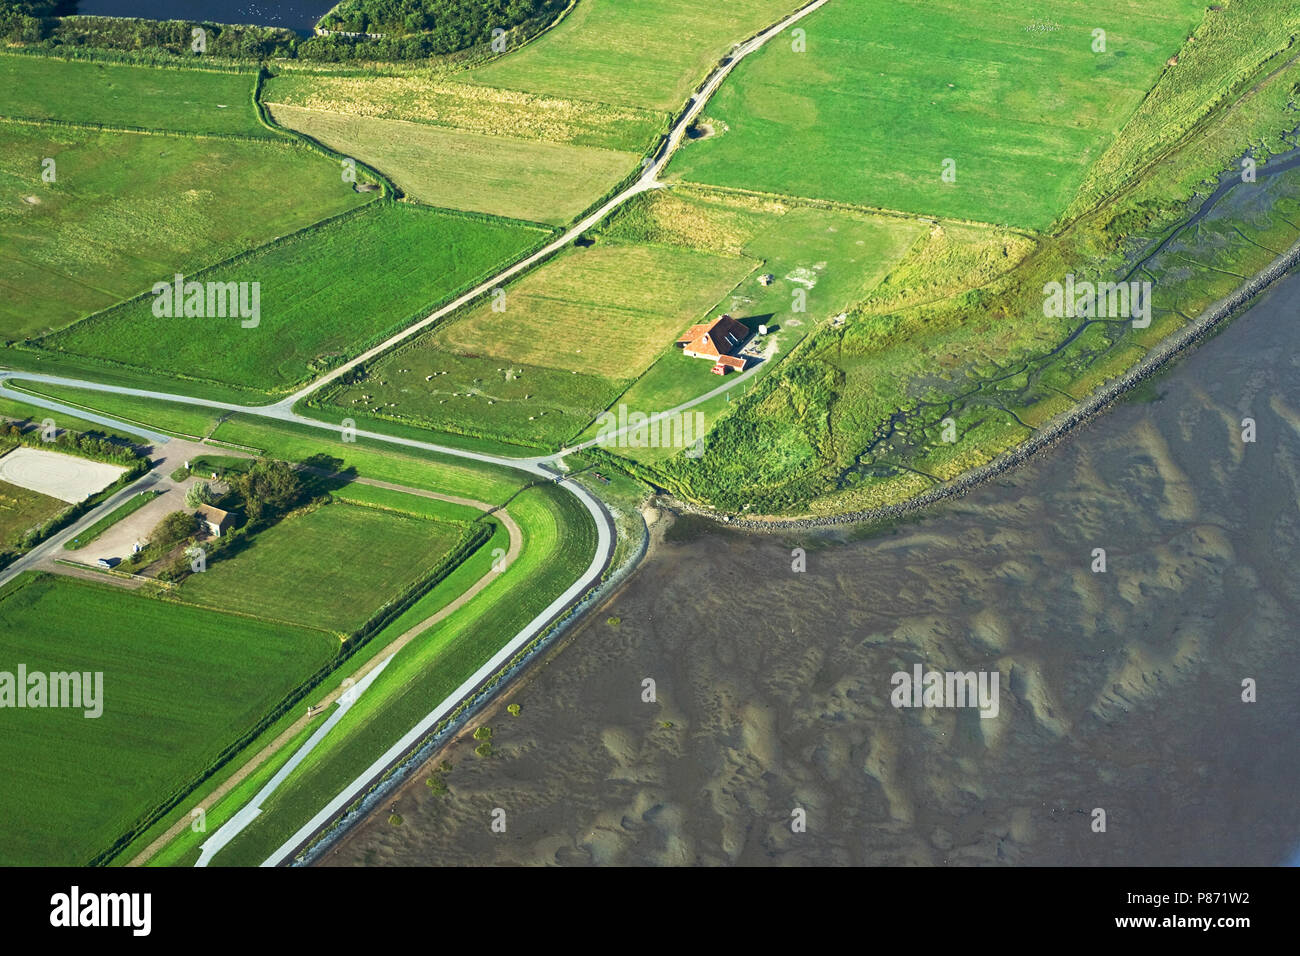 Luchtfoto van Terschelling ; photo aérienne de Terschelling Banque D'Images